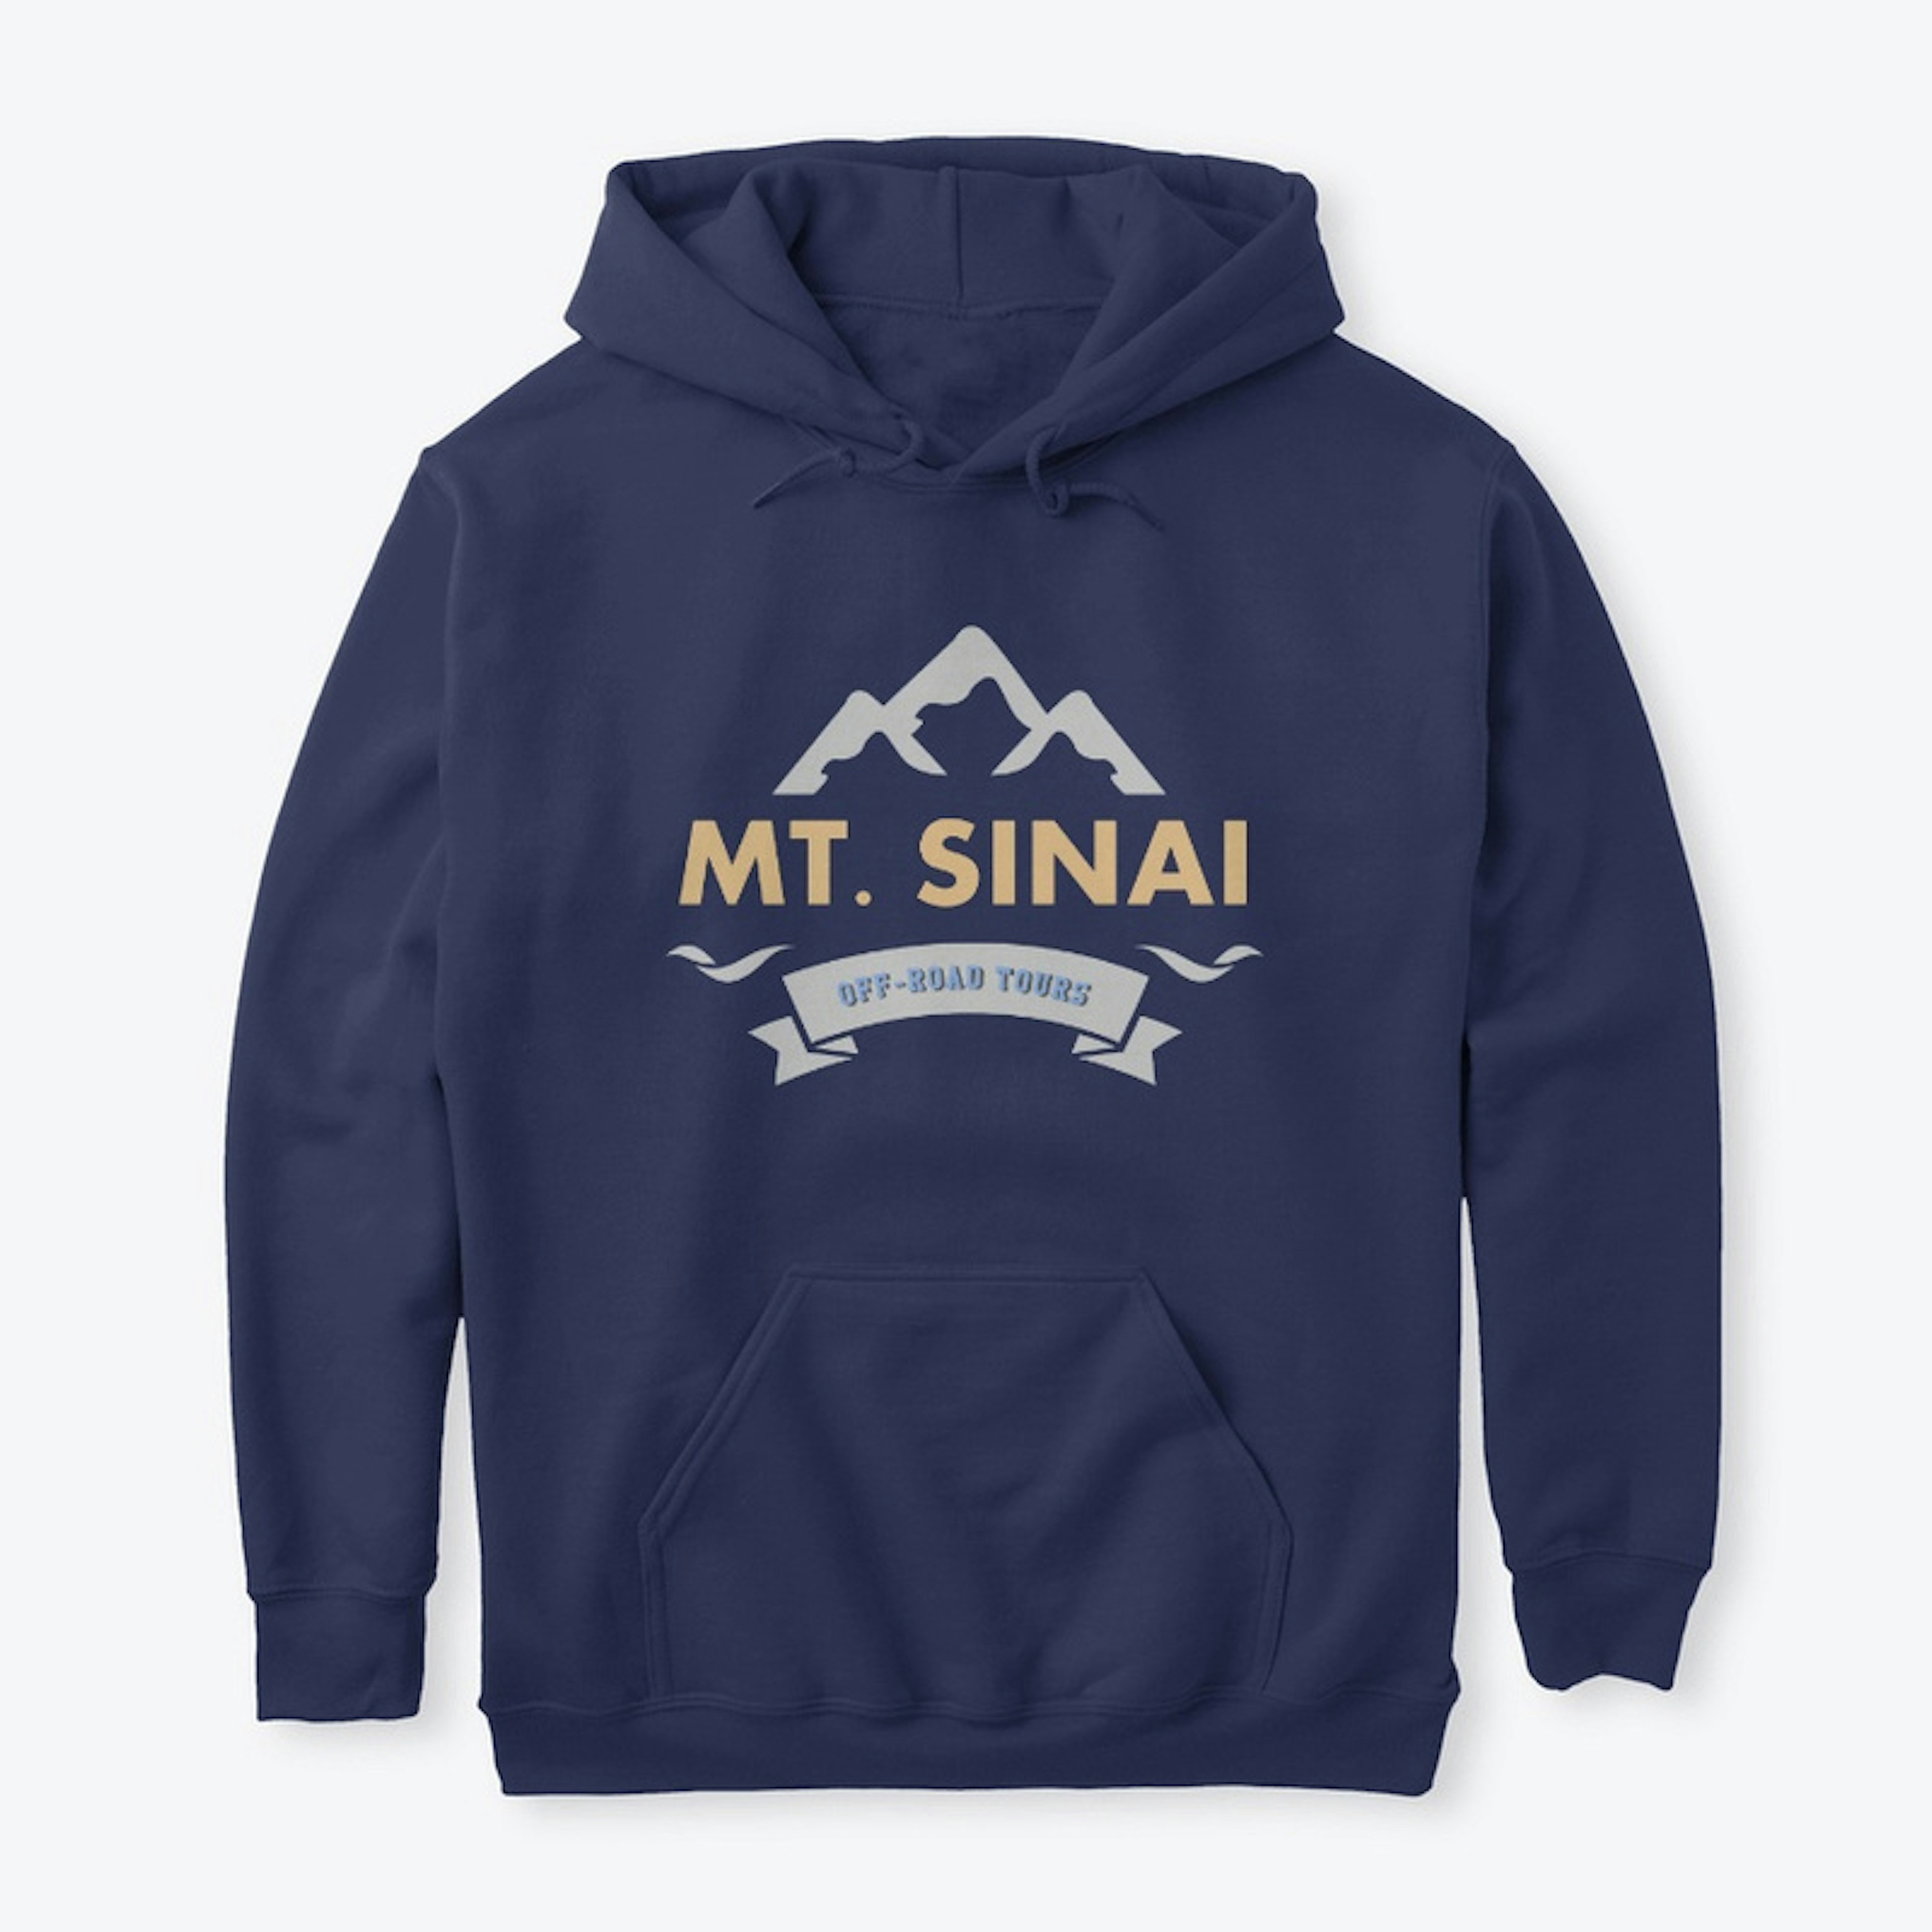 Mt. Sinai Off-Road Tours